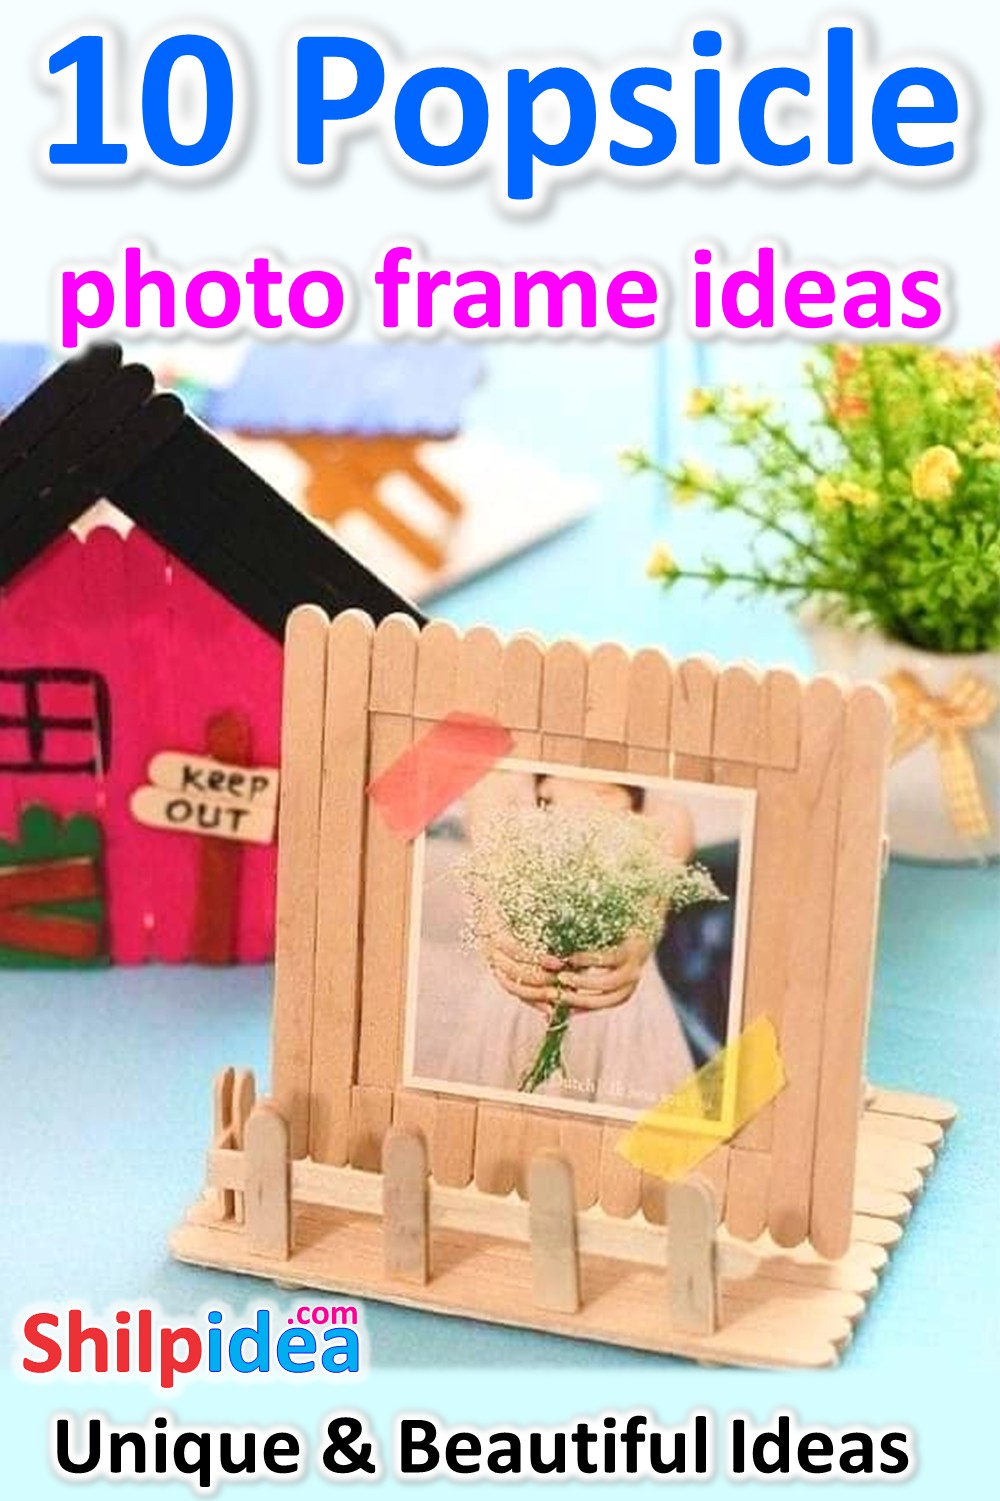 popsicle-photo-frame-ideas-shilpidea-pin